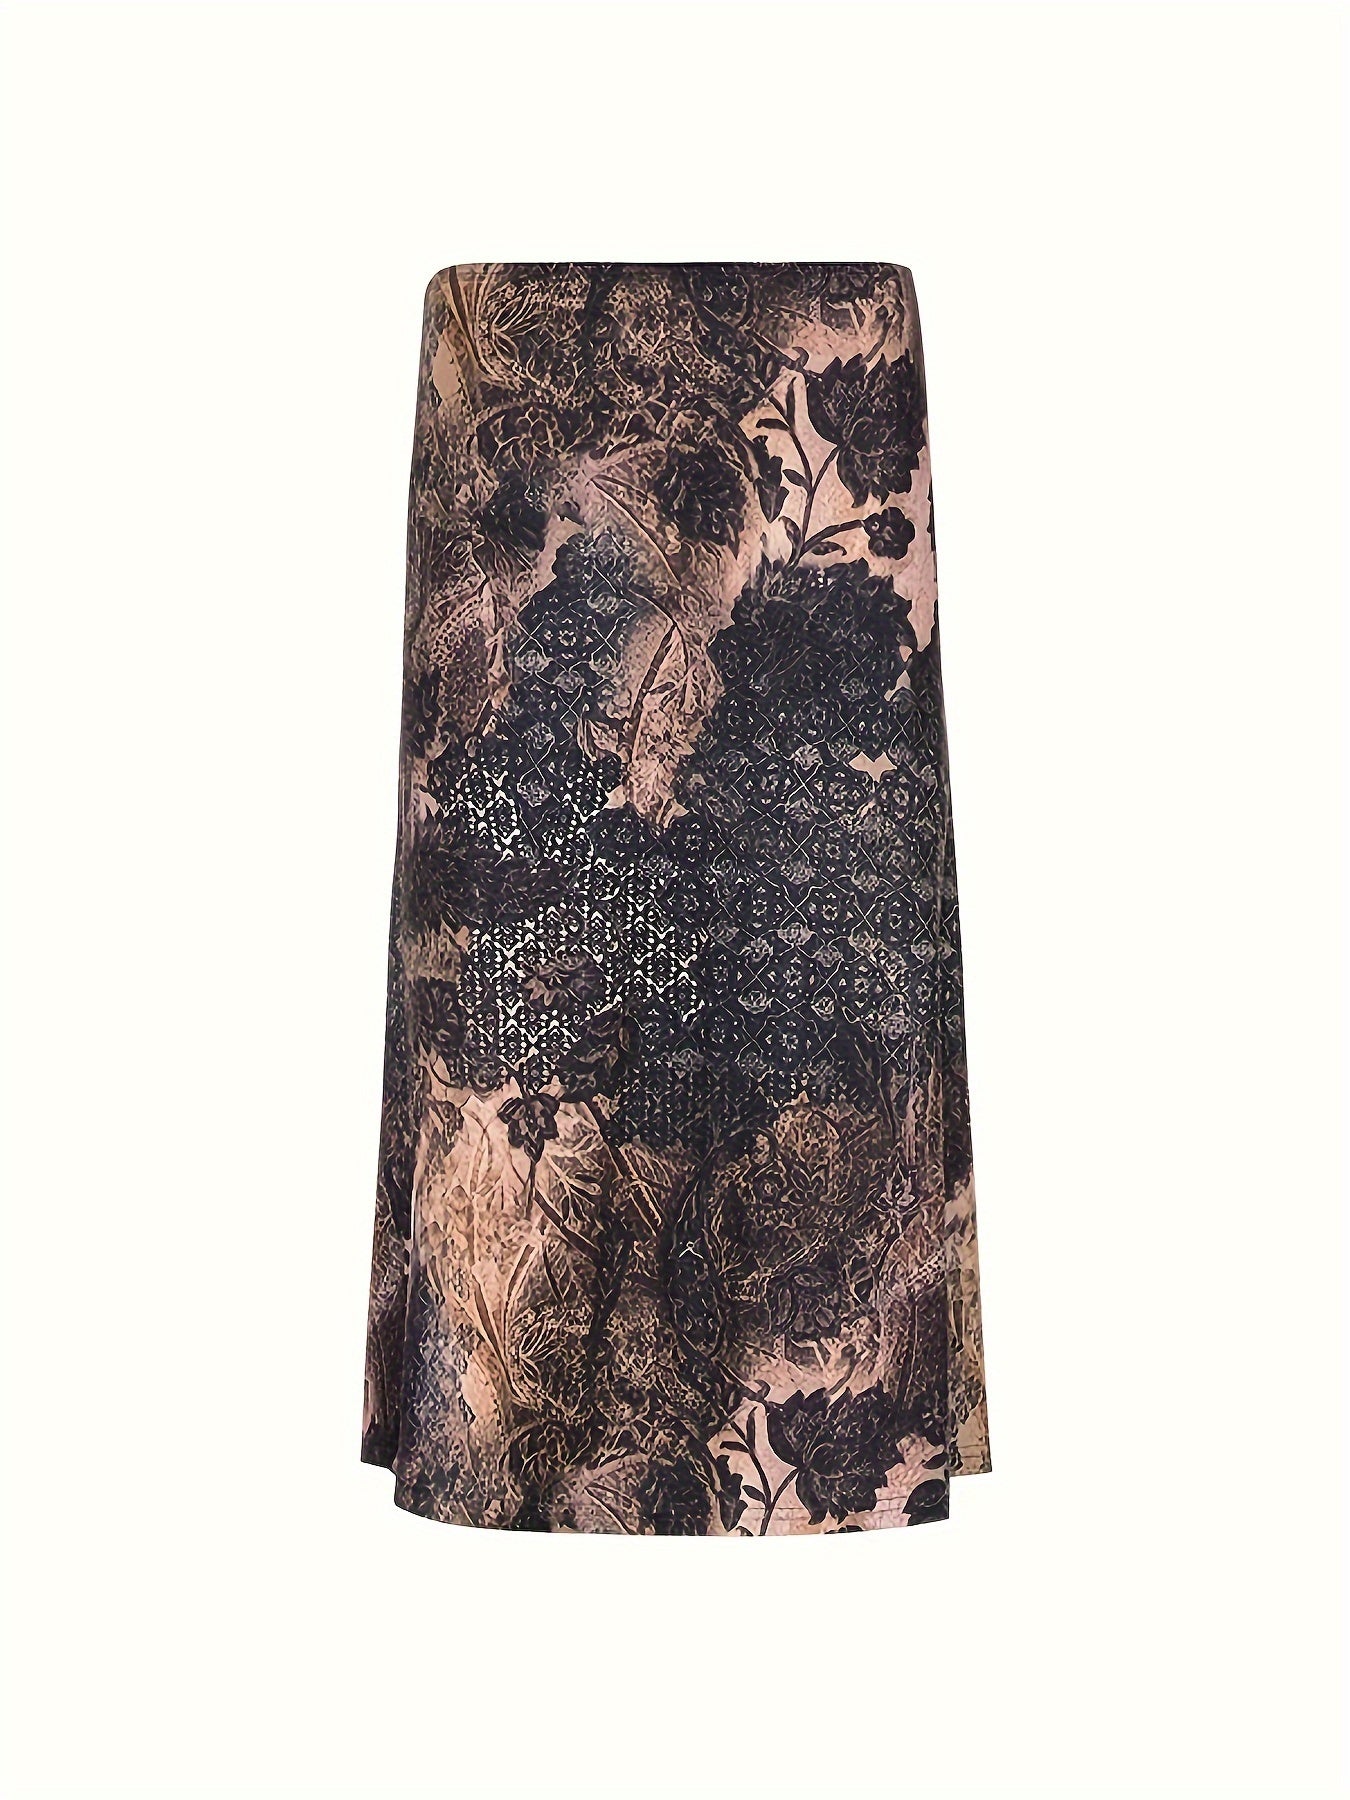 xieyinshe Floral Print Ruffle Hem Skirt, Vintage Elastic Waist Midi Skirt, Women's Clothing